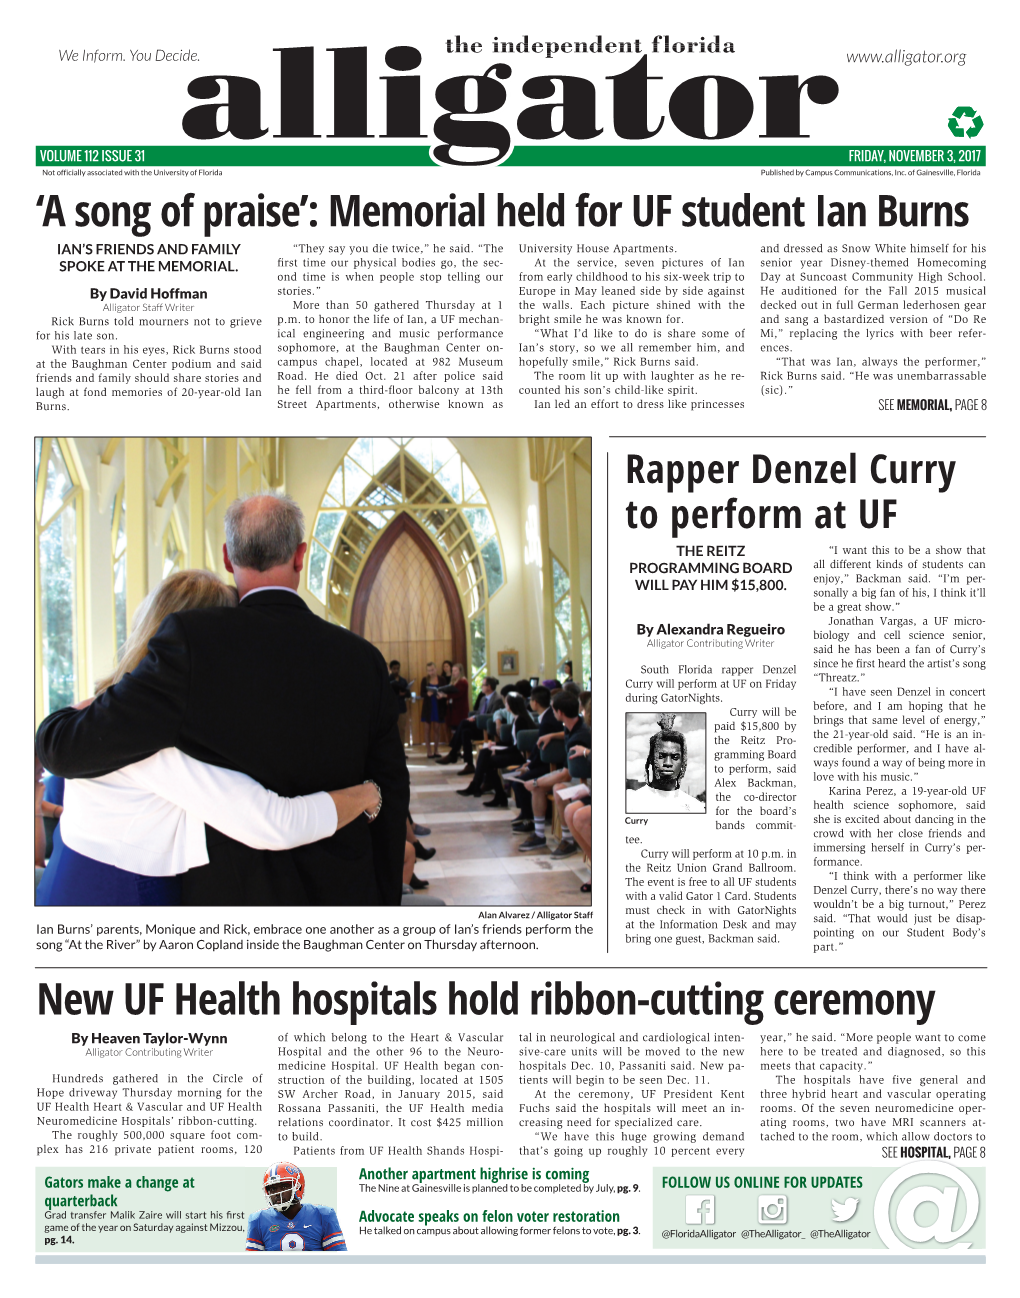 Memorial Held for UF Student Ian Burns New UF Health Hospitals